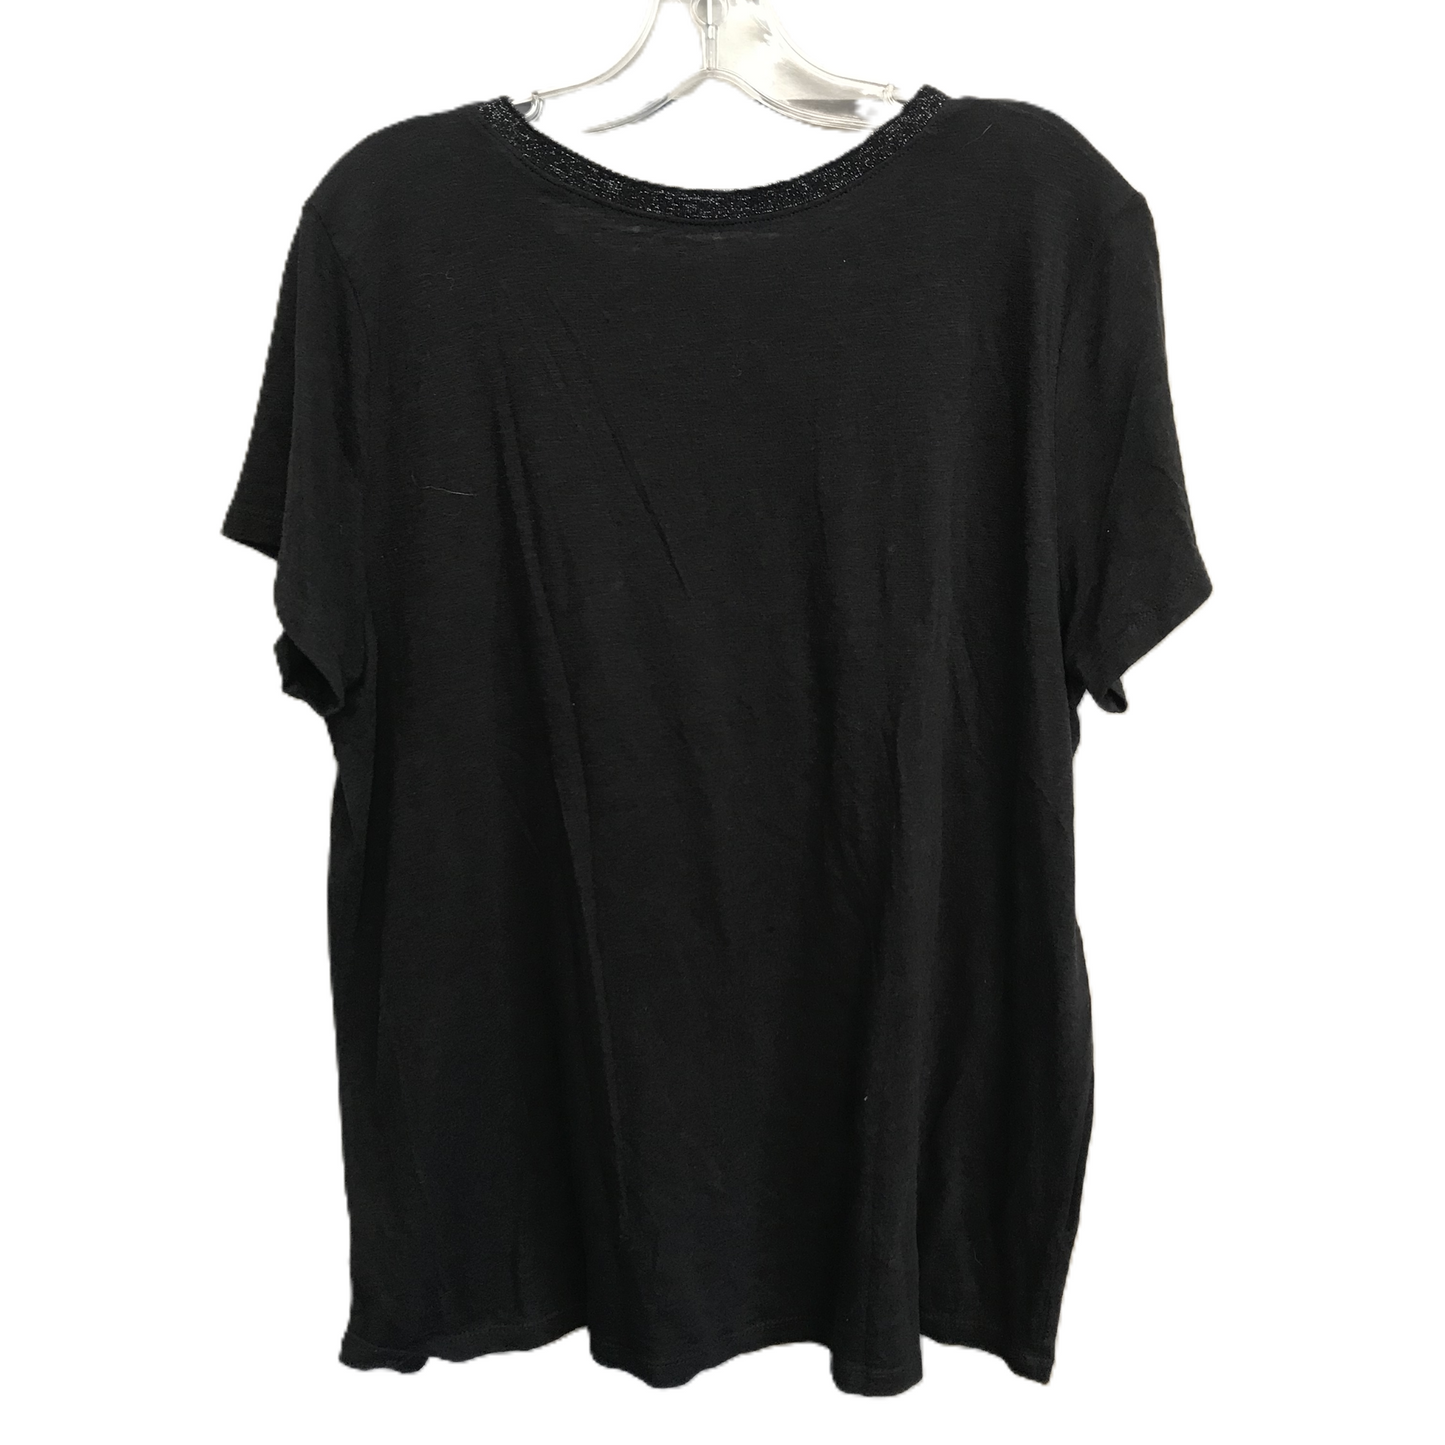 Black Top Short Sleeve Basic By Torrid, Size: 1x